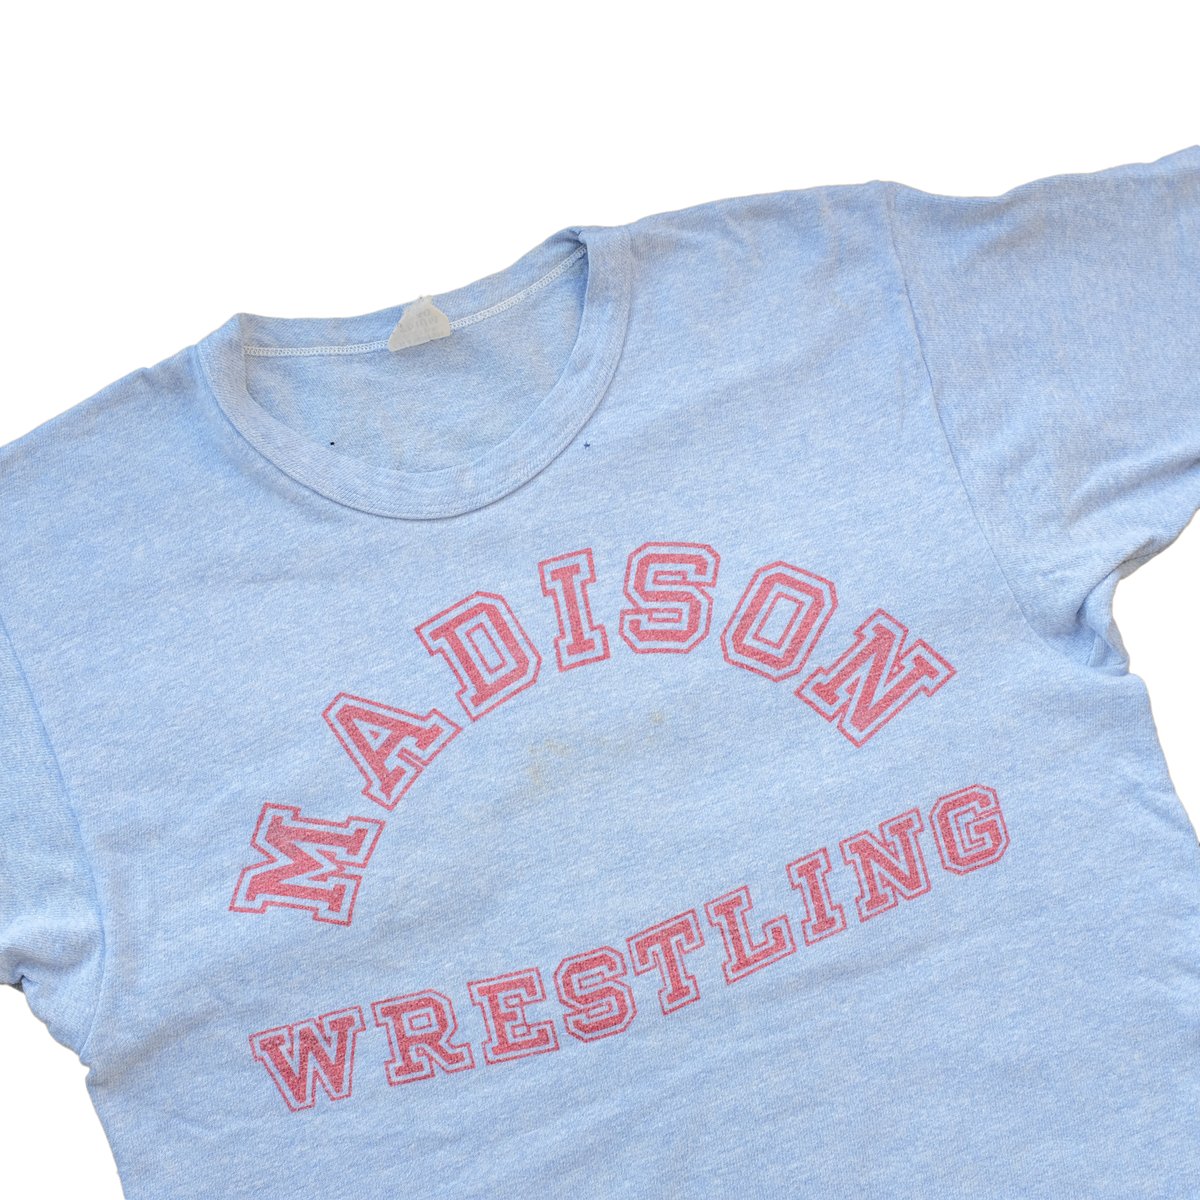 Image of Vintage 1960's Champion Madison Wrestling Tee